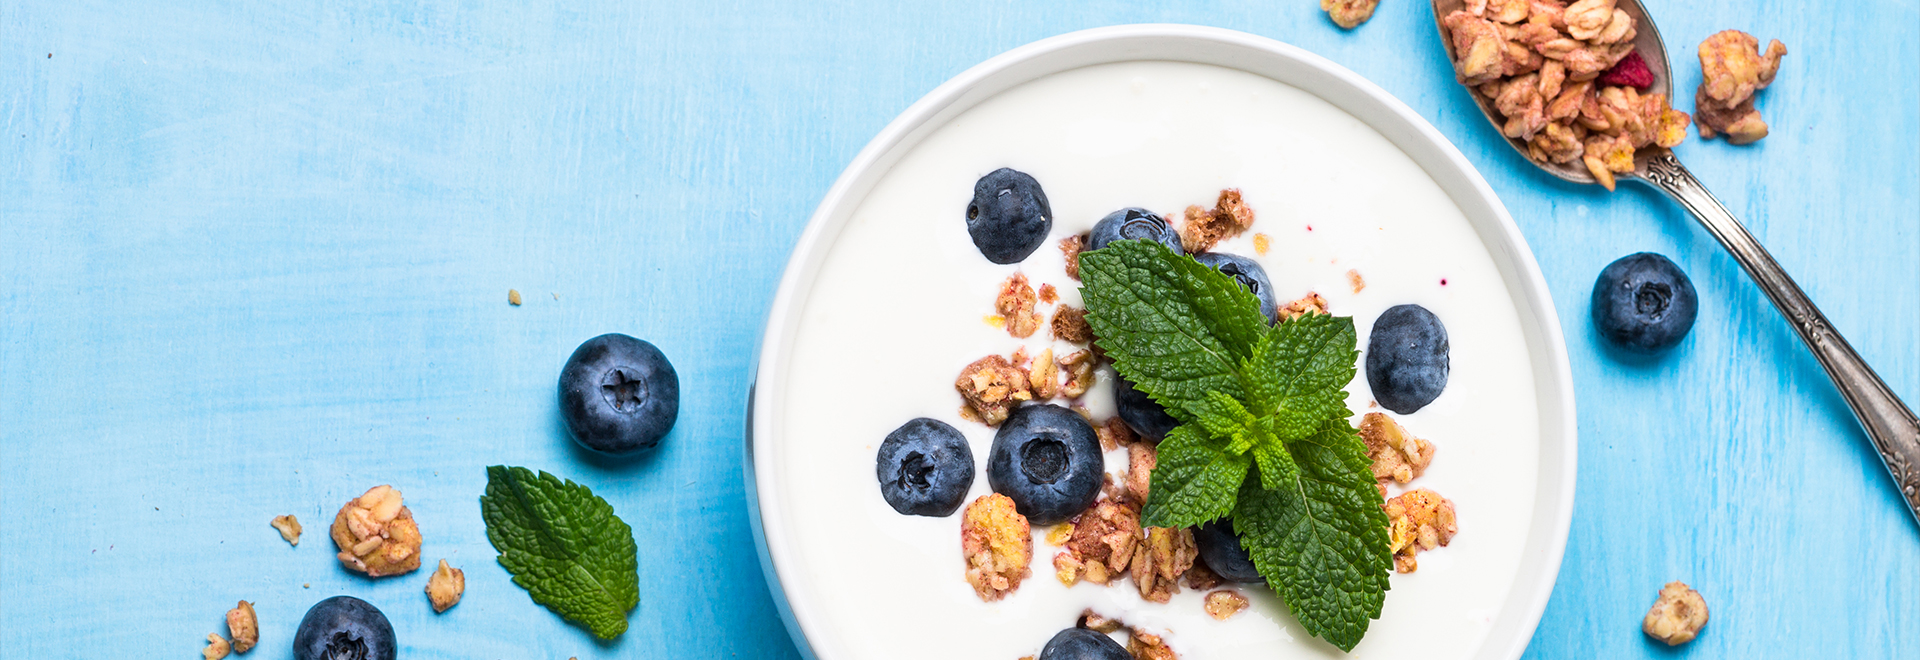 greek-yogurt-and-benefits-comparison